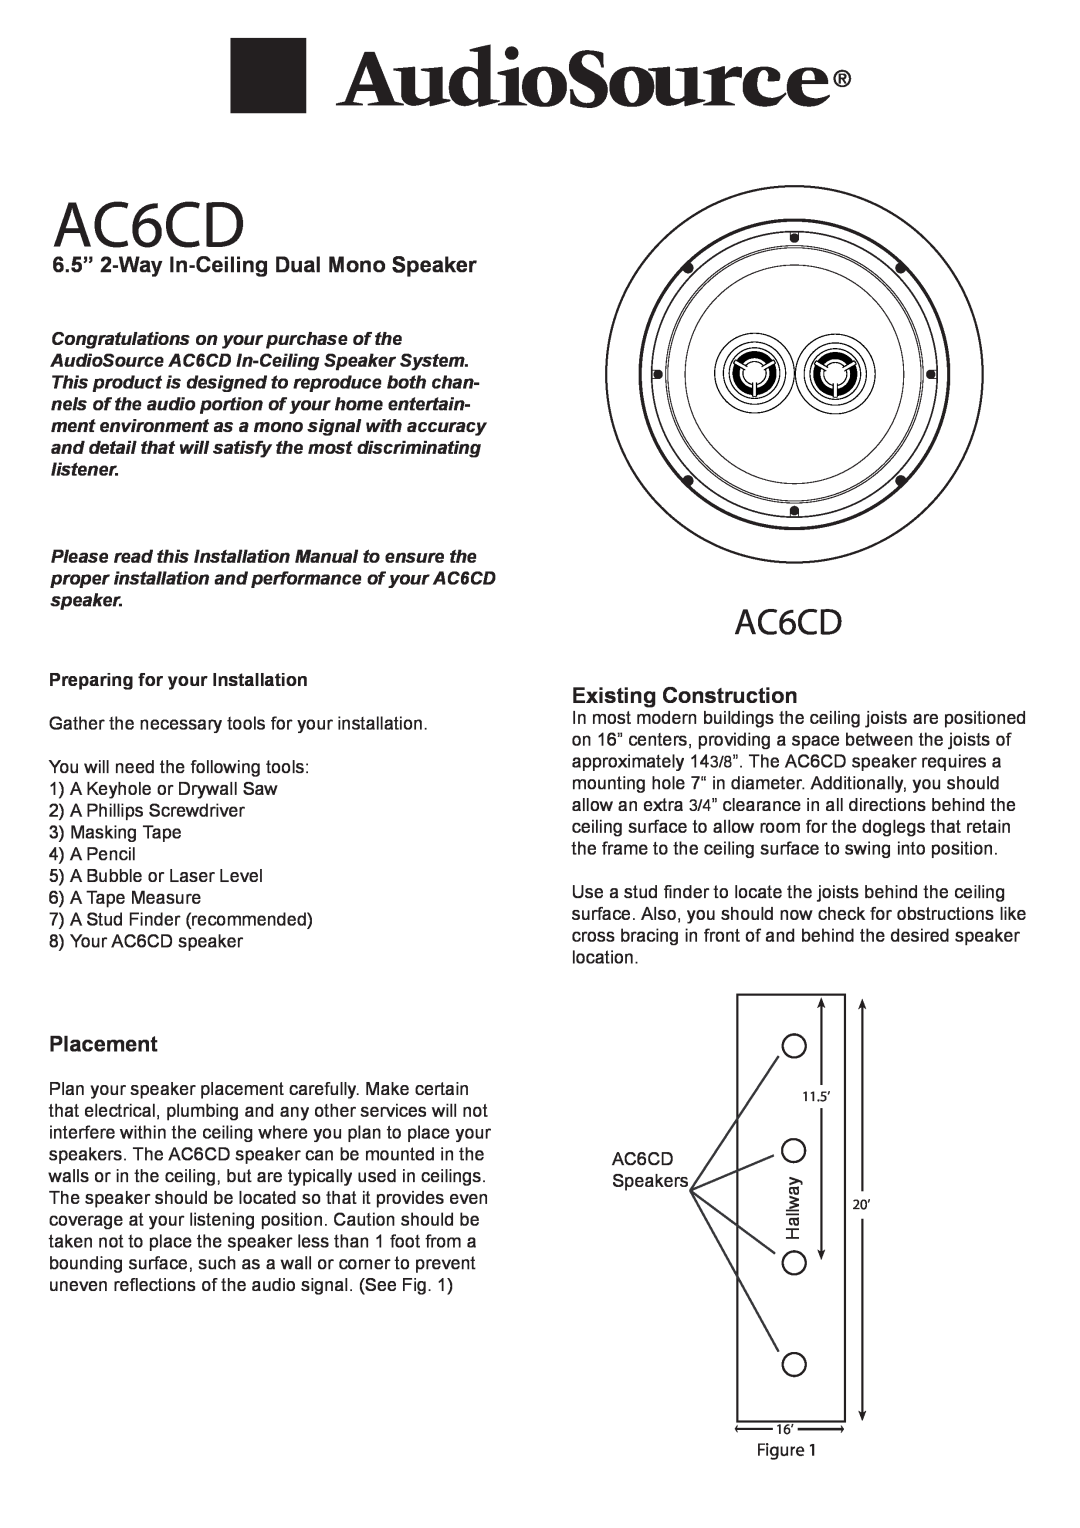 AudioSource AudioSource In-Ceiling Speaker System installation manual AC6CD, 6.5” 2-Way In-CeilingDual Mono Speaker 